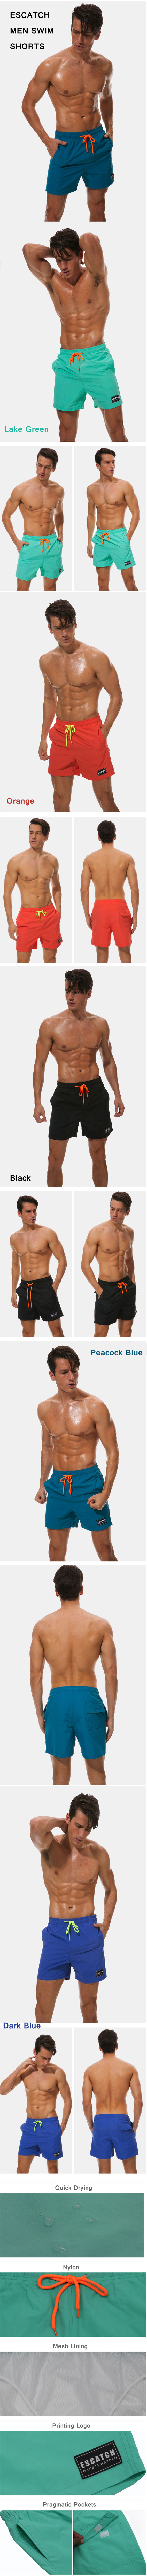 ESCATCH-Men-Summer-Swimming-Trunks-Nylon-Surfing-Waterproof-Quick-Dry-Pockets-Beach-Shorts-1330922-1